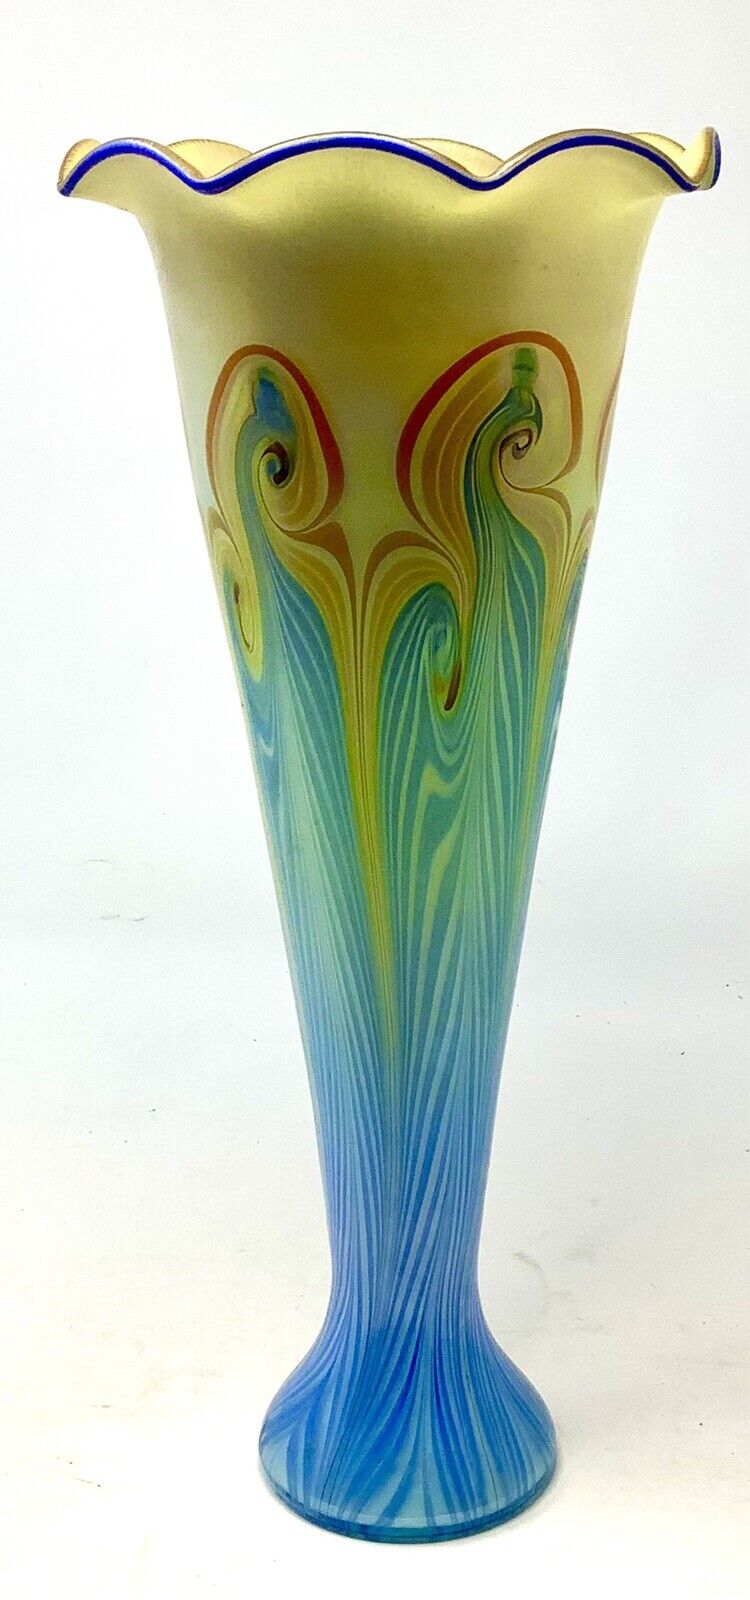 VTG Vandermark Pulled Feather Iridescent Vase Signed Dated 1980 & Numbered 0444